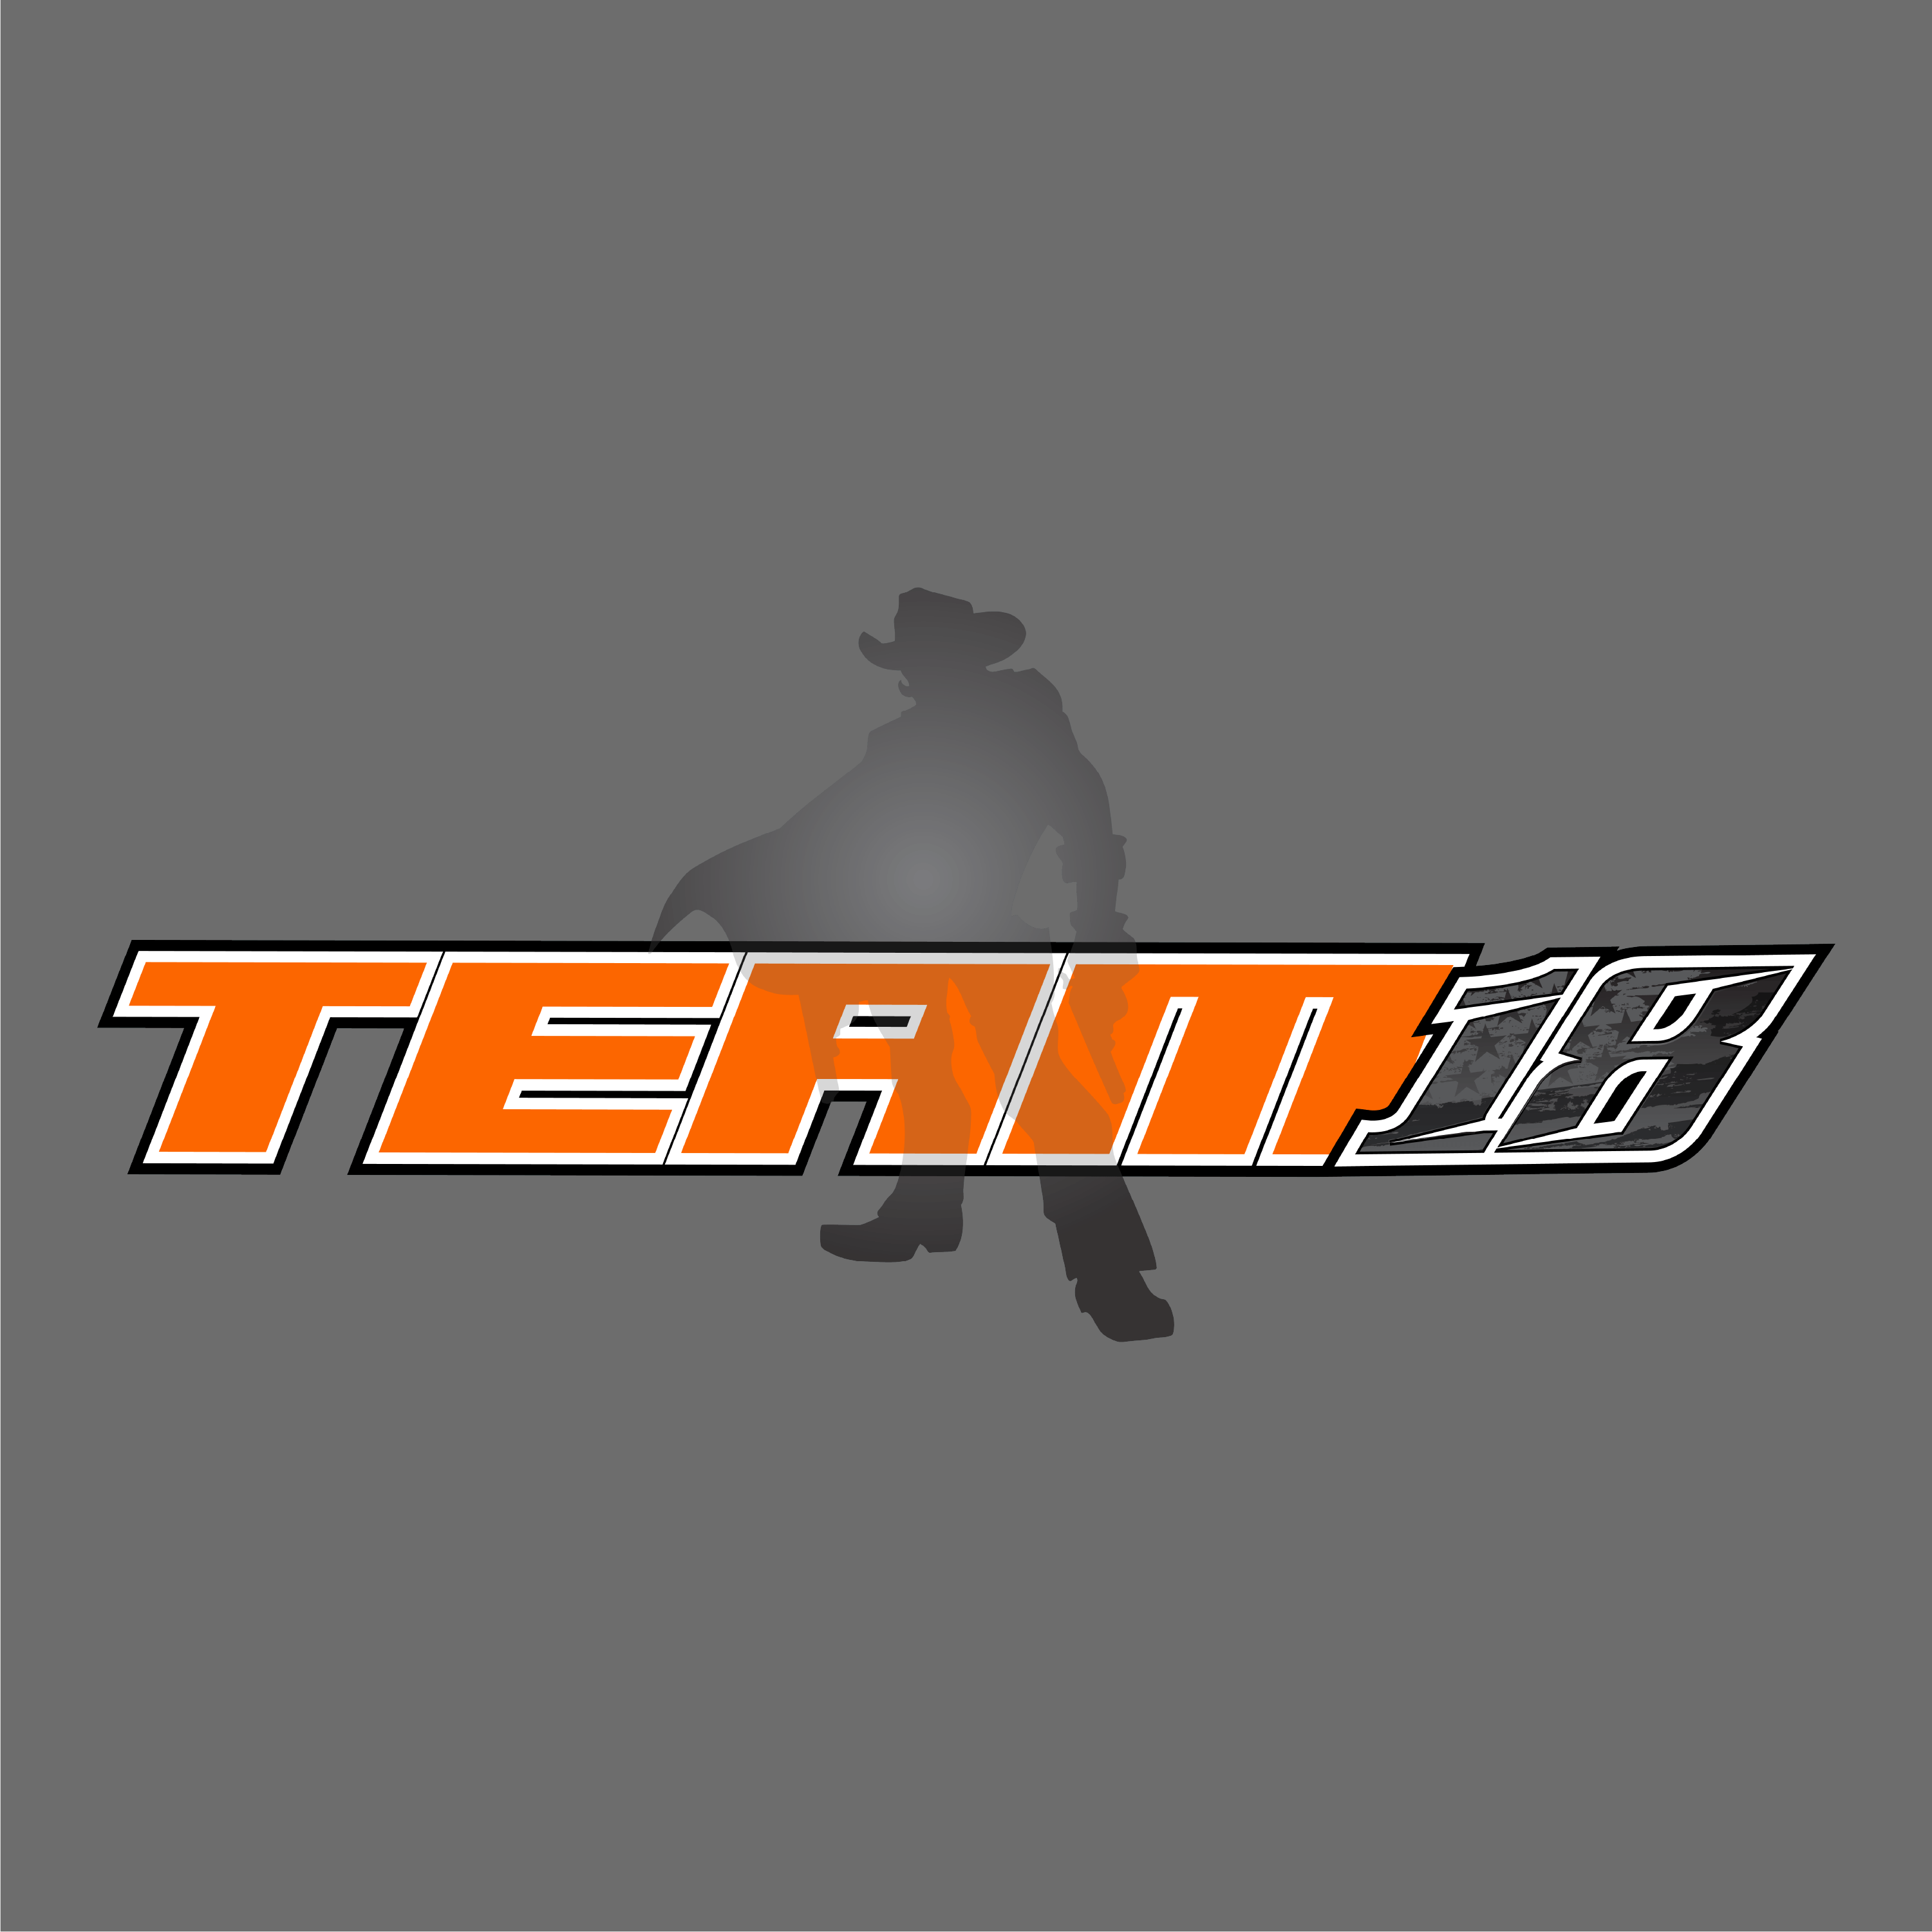 Team18 2024 Race Shirt- Gunmetal